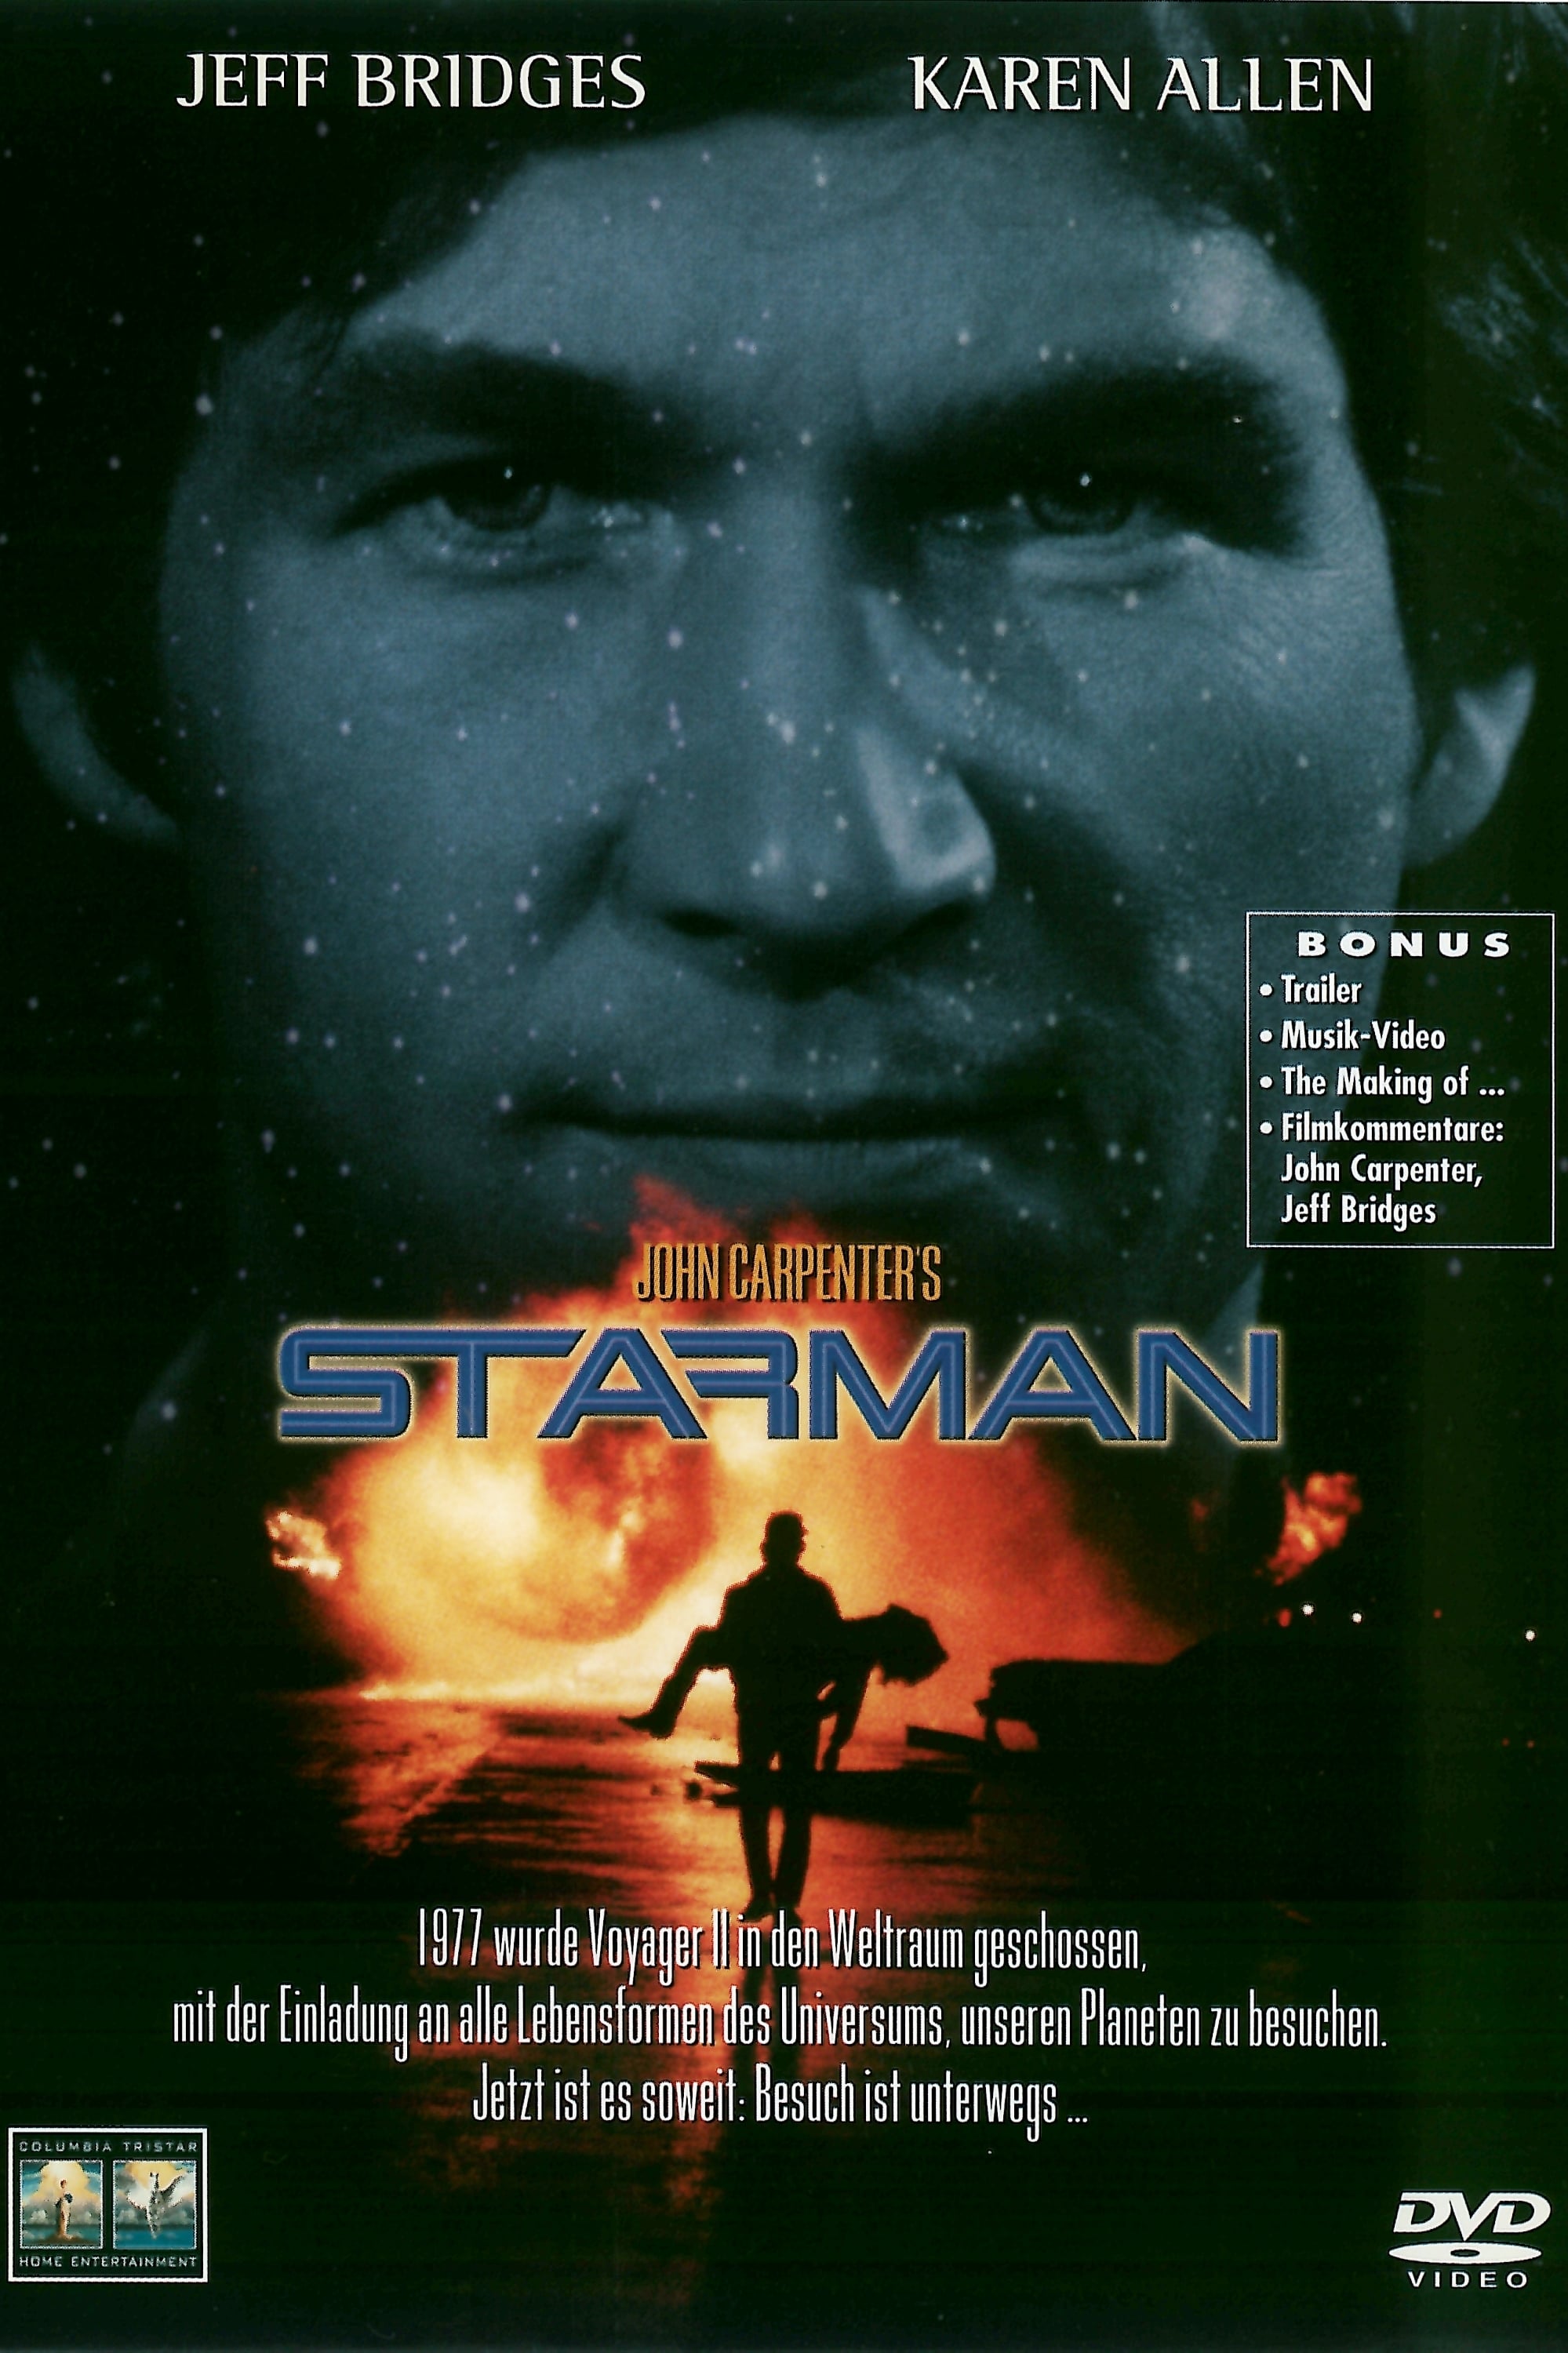 Plakat von "Starman"